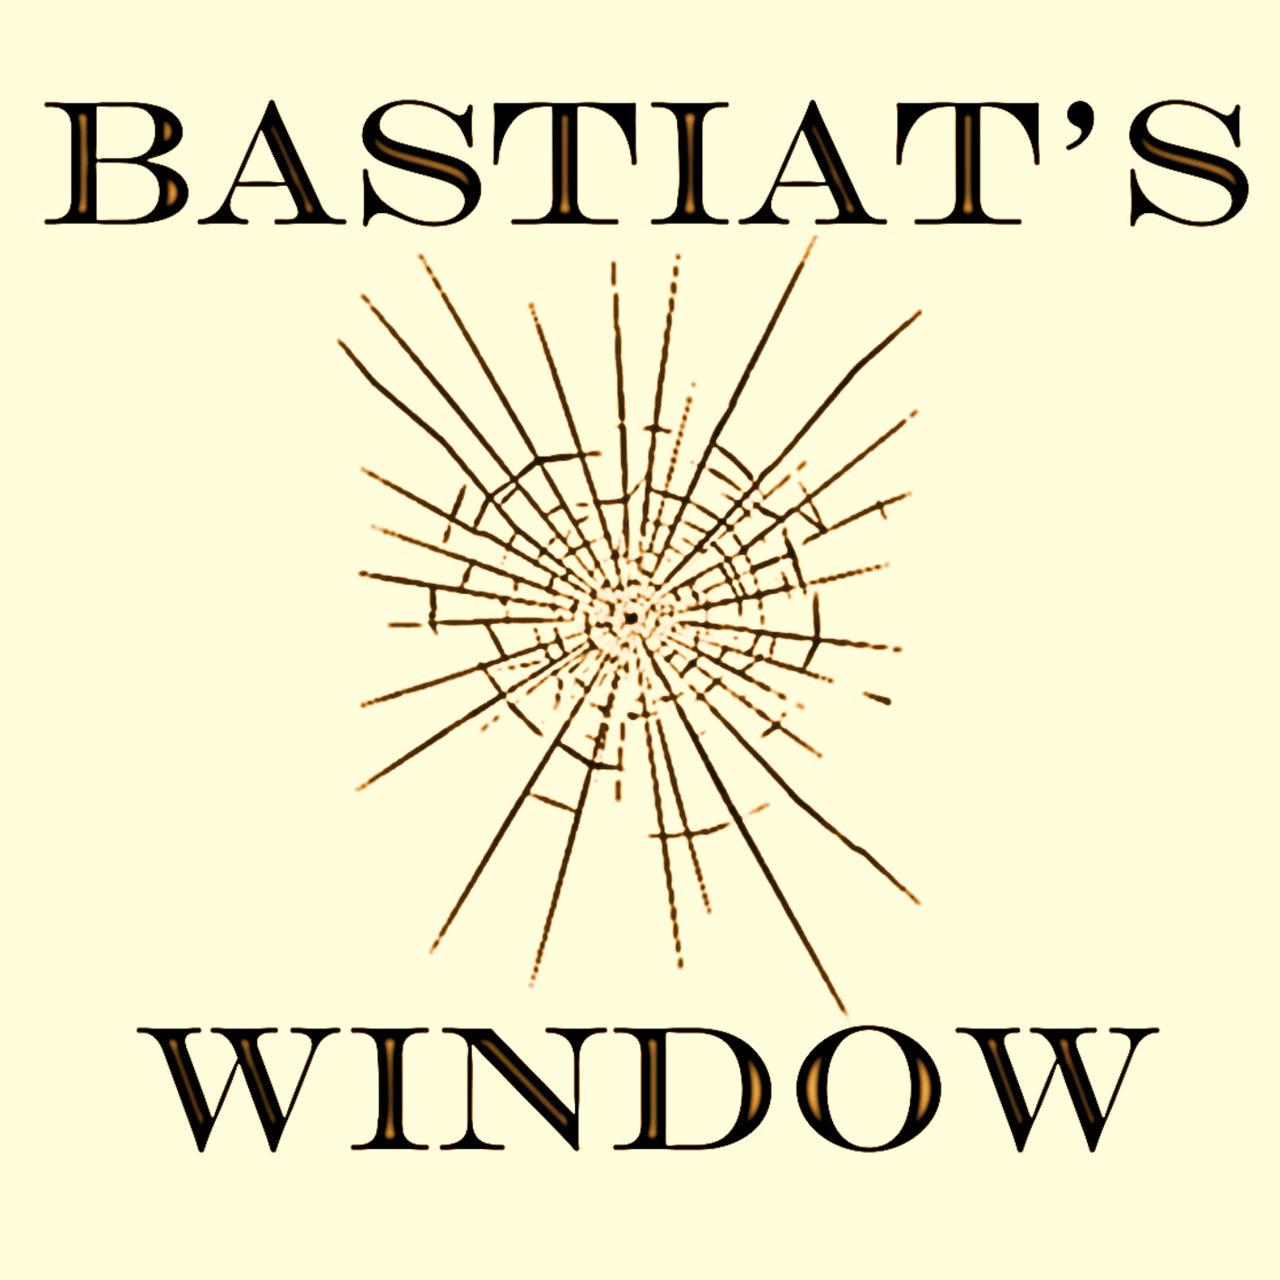 Bastiat's Window